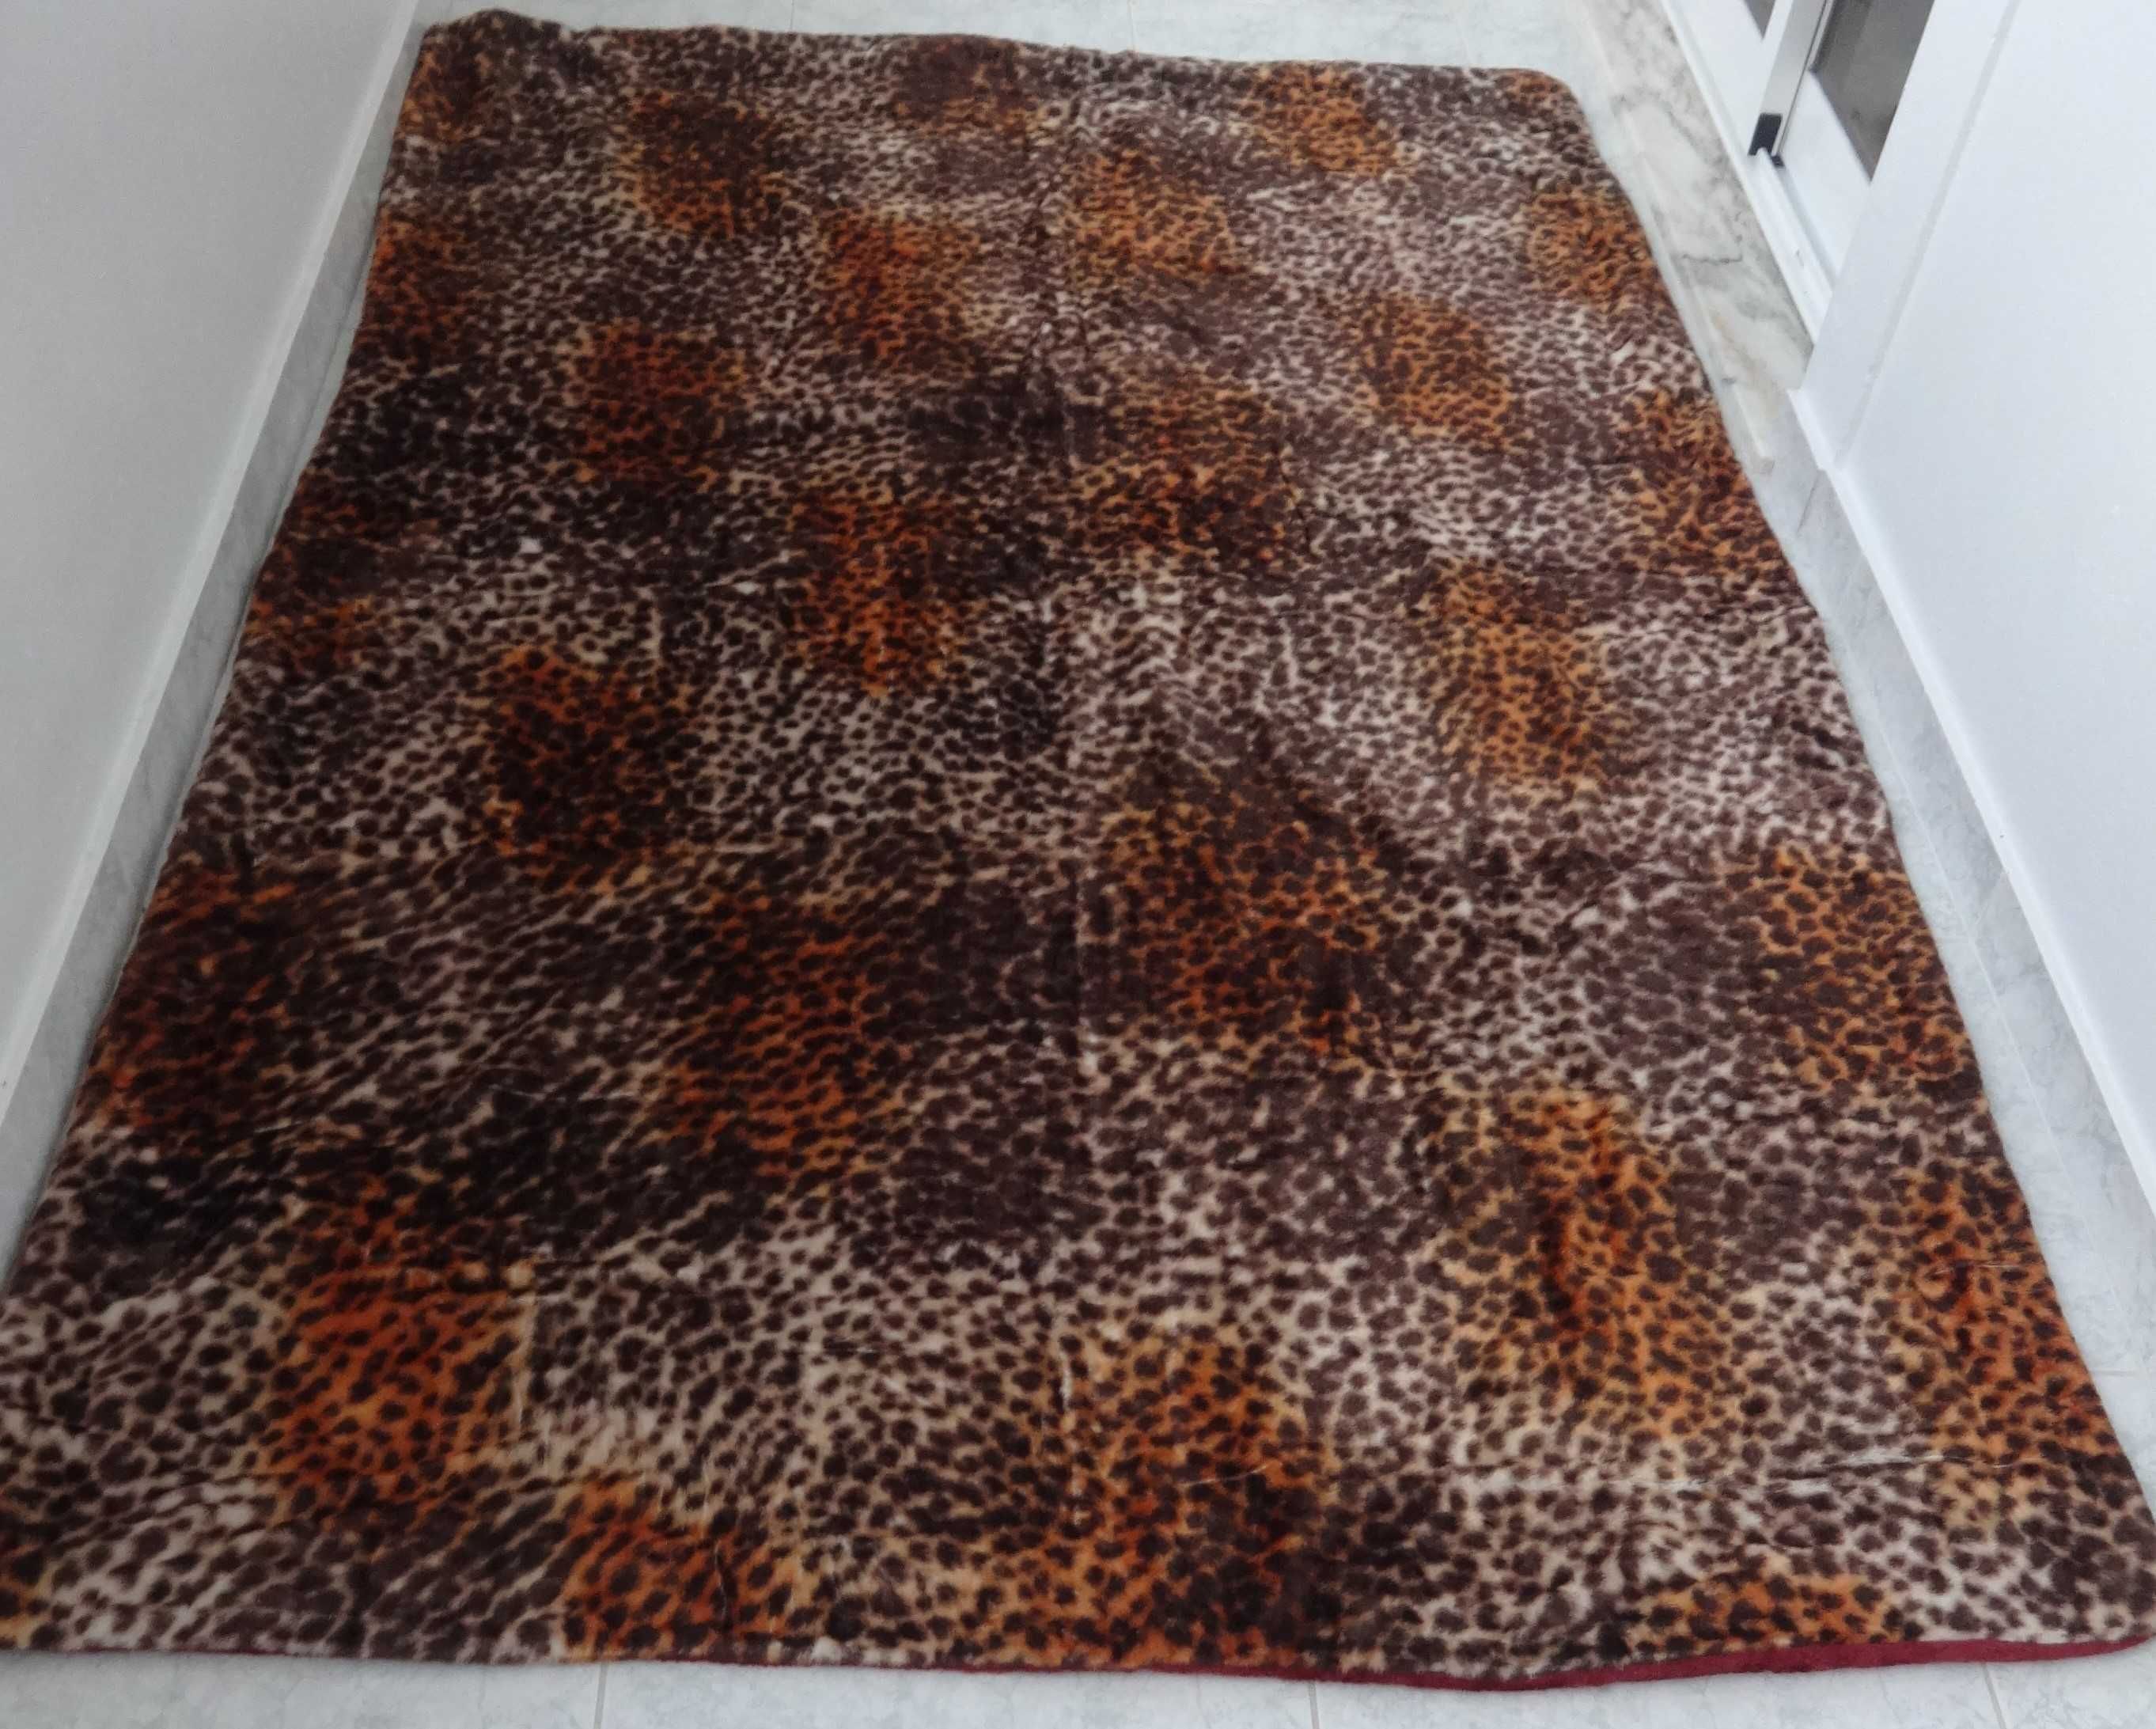 Cobertor / Manta com estampa de leopardo